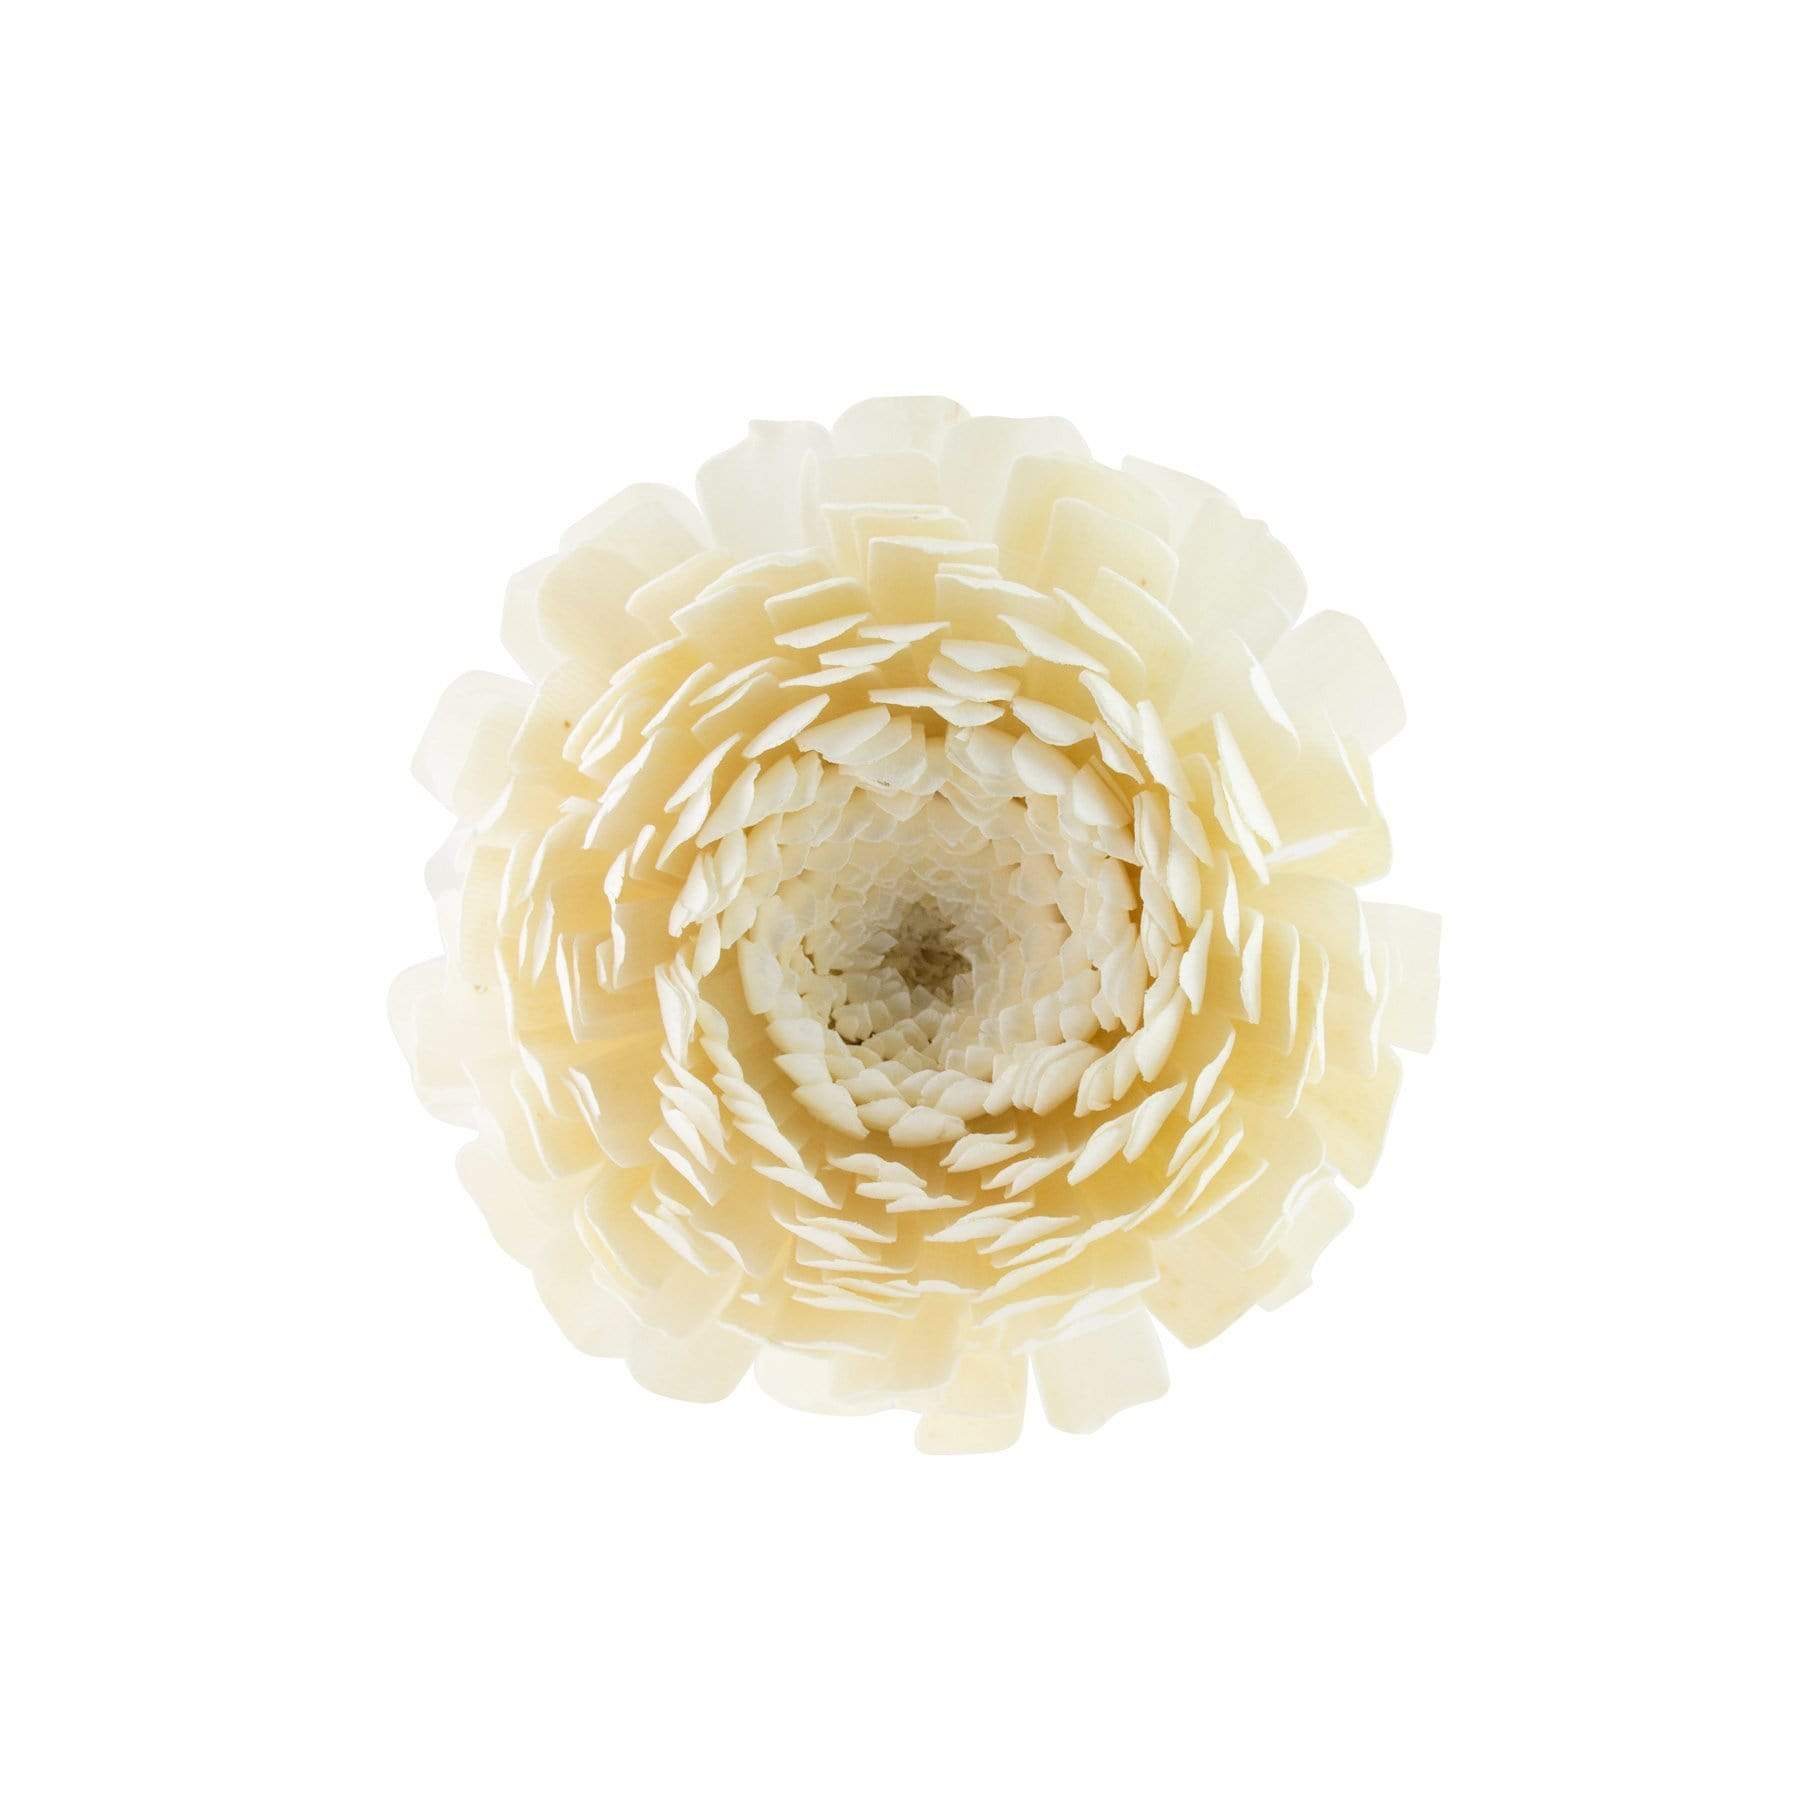 HYSSES Home Scents 2.5" Solar Flower Diffuser Refill - Chrysanthemum 2.5"